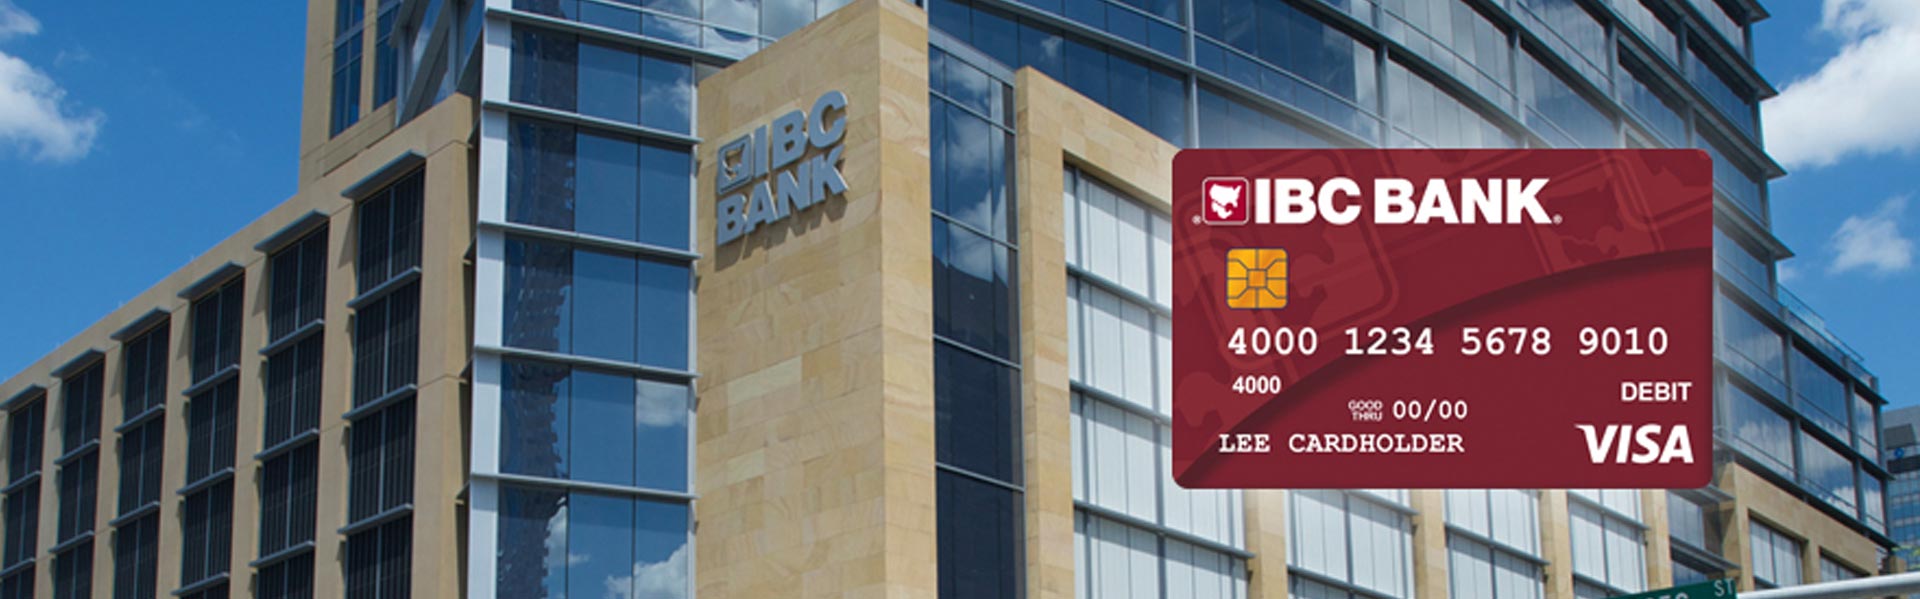 ibc bank online bankin g